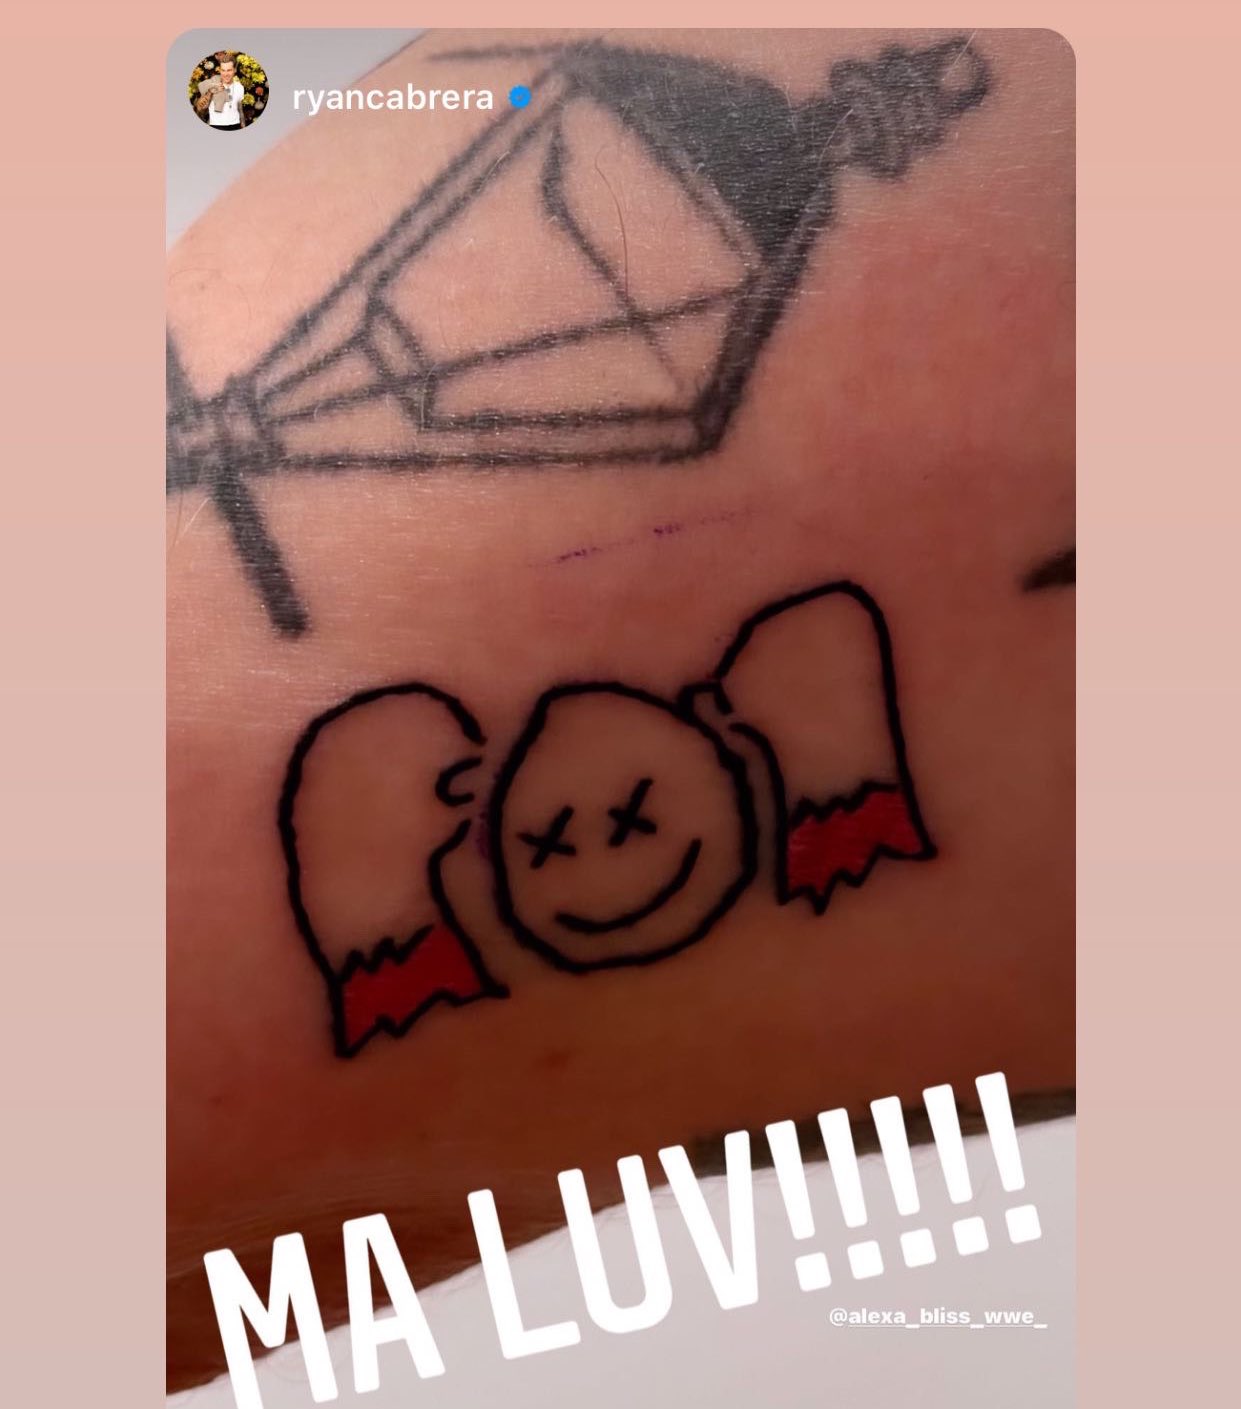 Alexa Bliss slams critics after she gets a tattoo with fiancé Ryan Cabrera